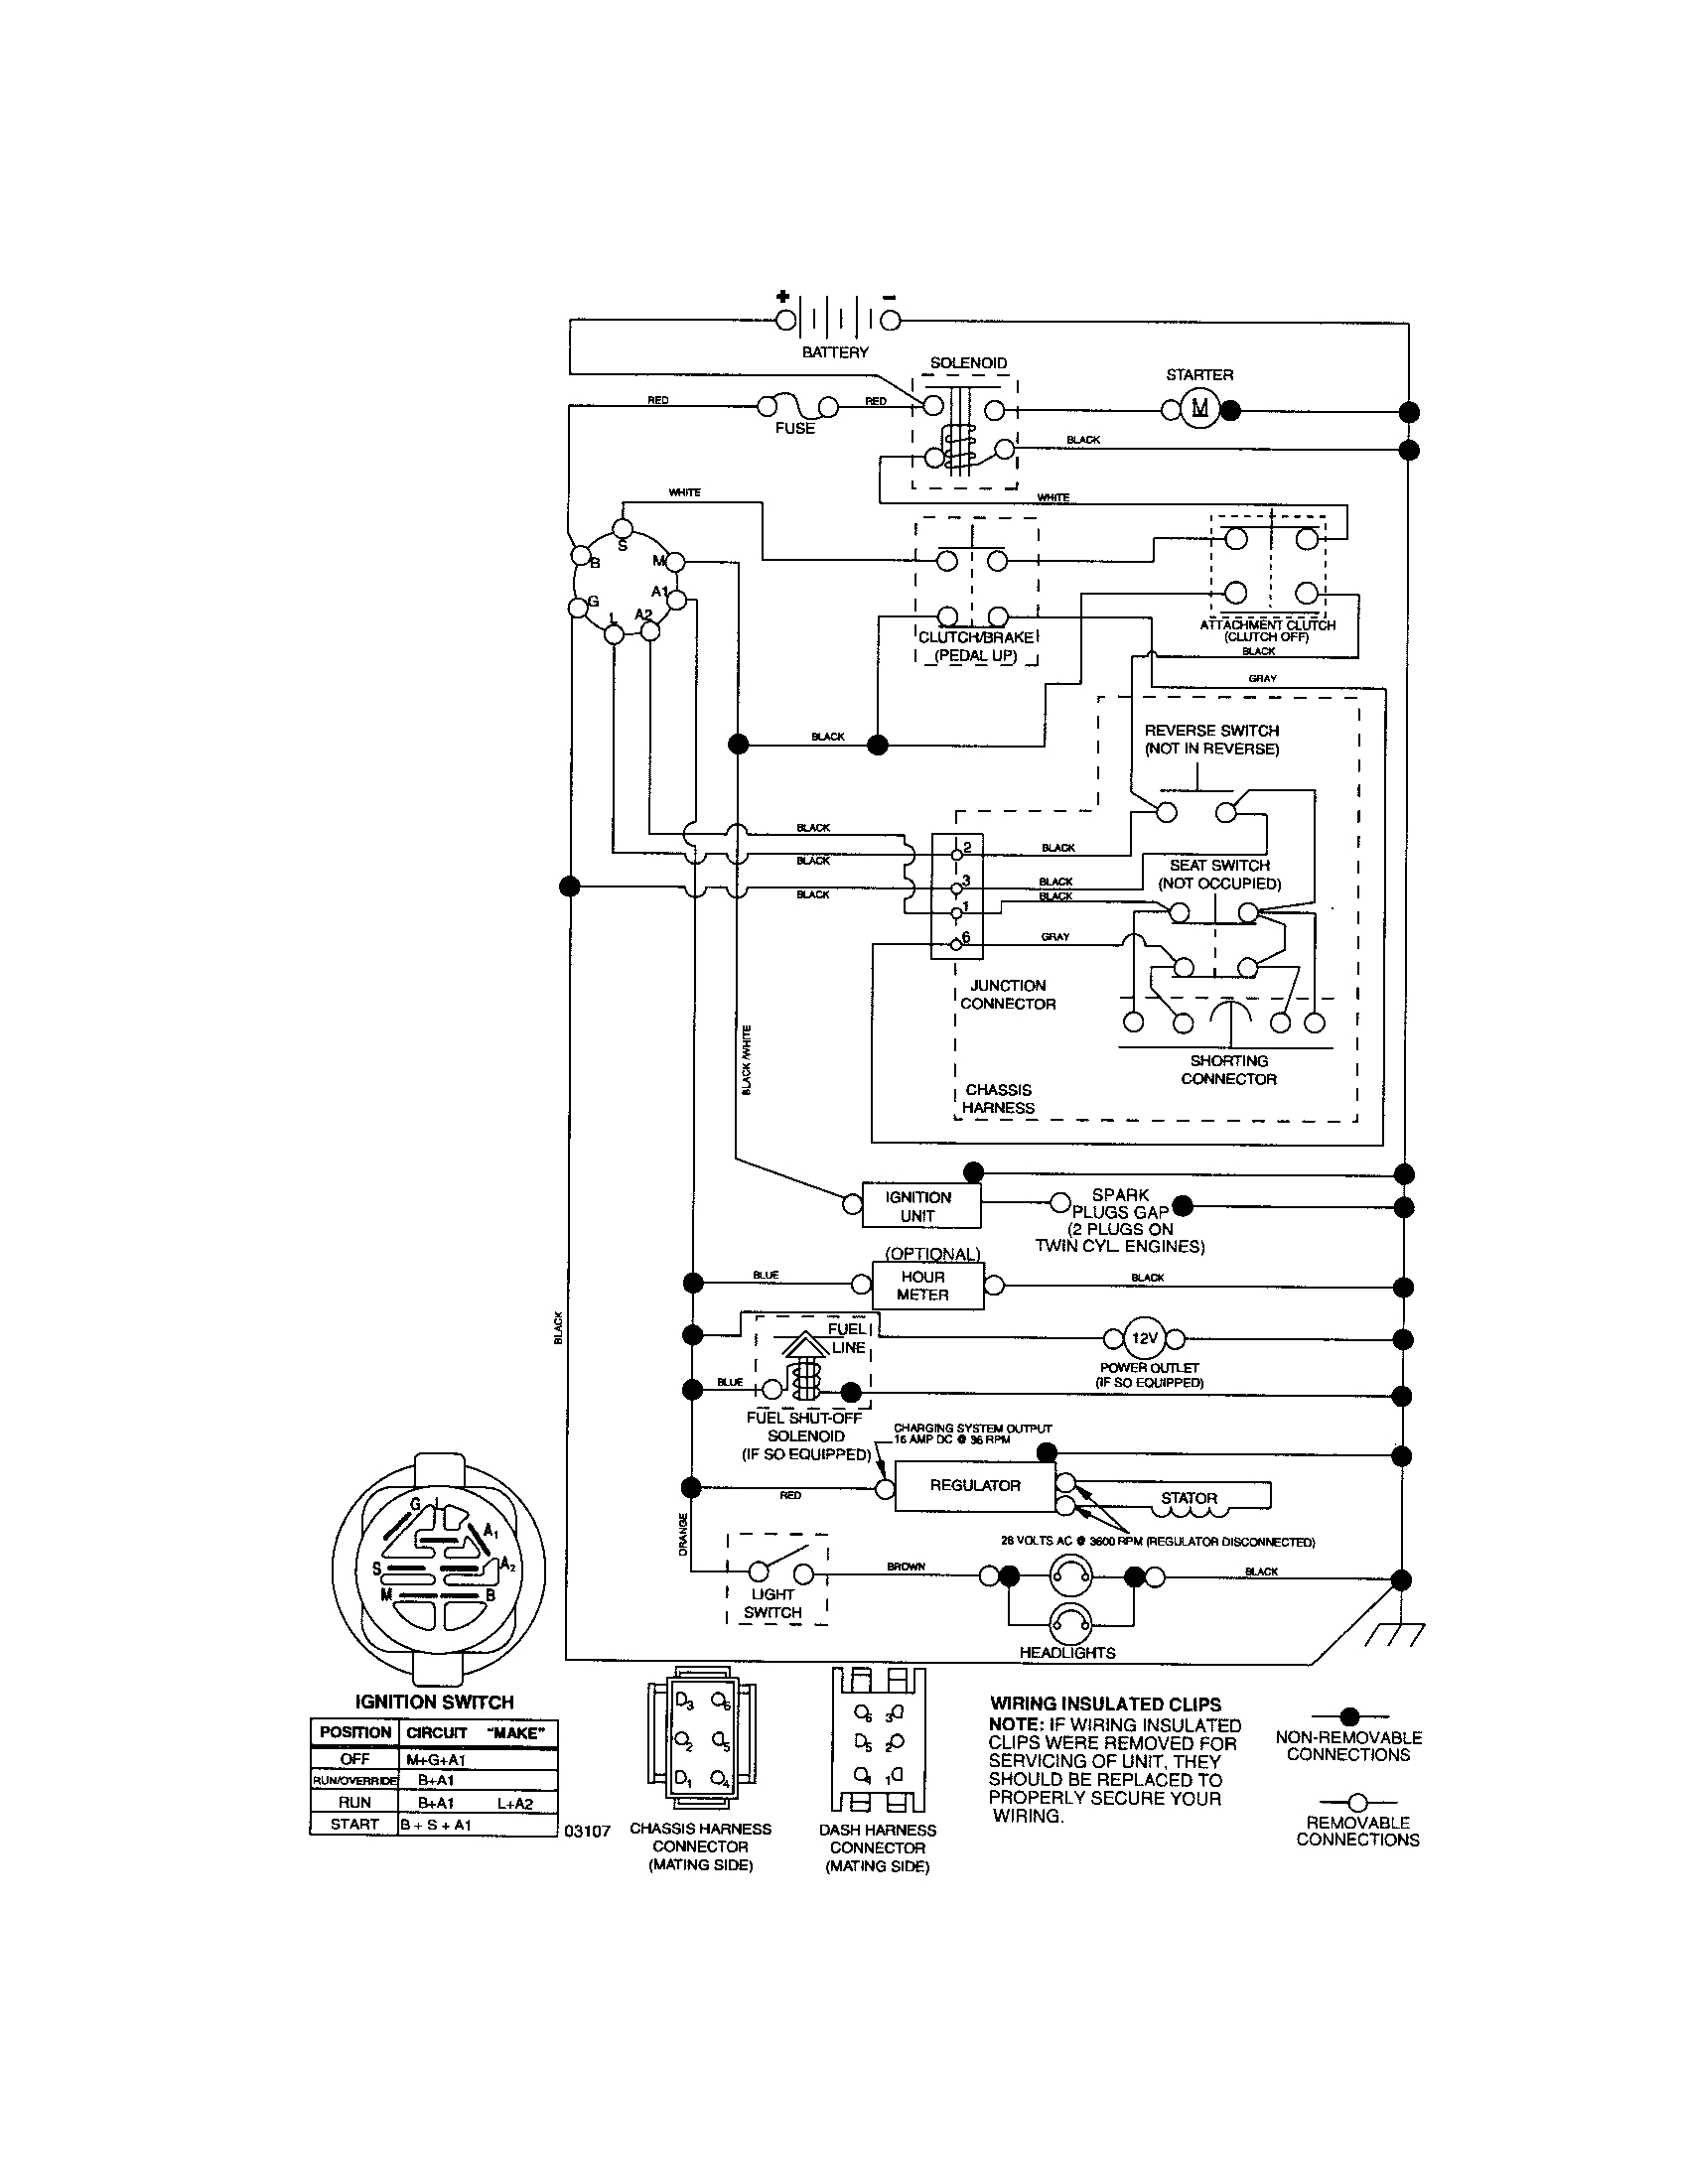 wiring diagram for a craftsman lawn mower wiring diagram expert 917 271021 craftsman lawn mower wire diagram